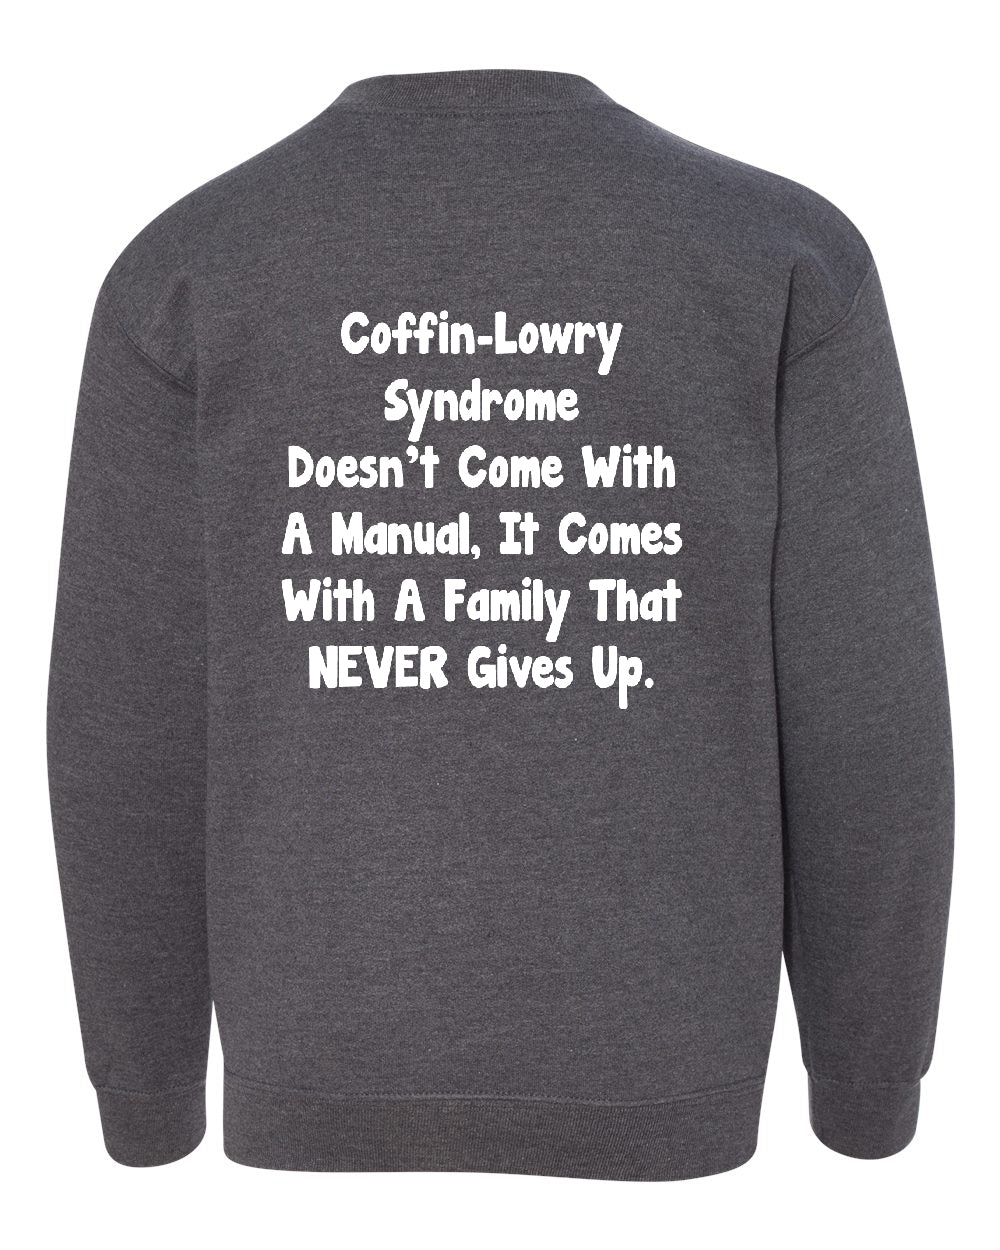 Coffin-Lowry Syndrome Sweatshirts (YOUTH CREWNECK)